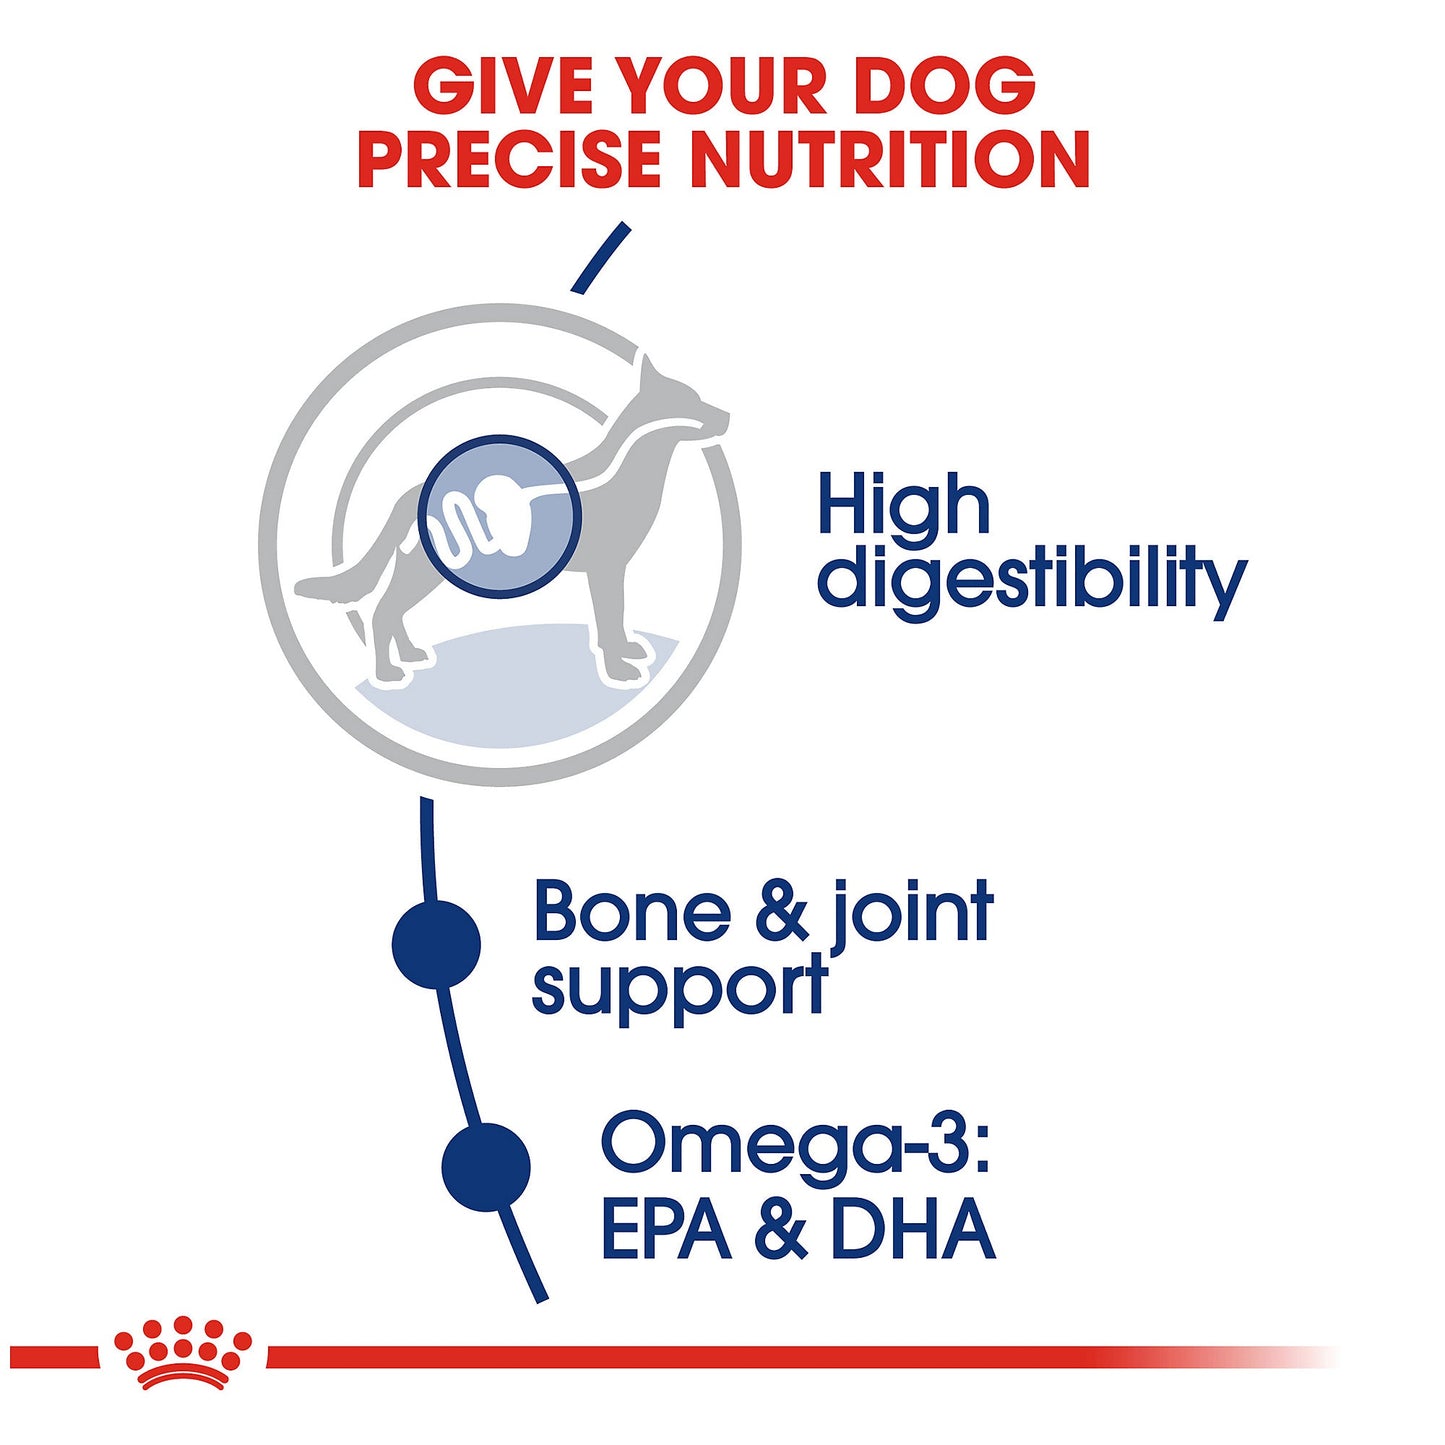 Royal Canin Large Breed Adult Dry Dog Food, 30-lb Bag